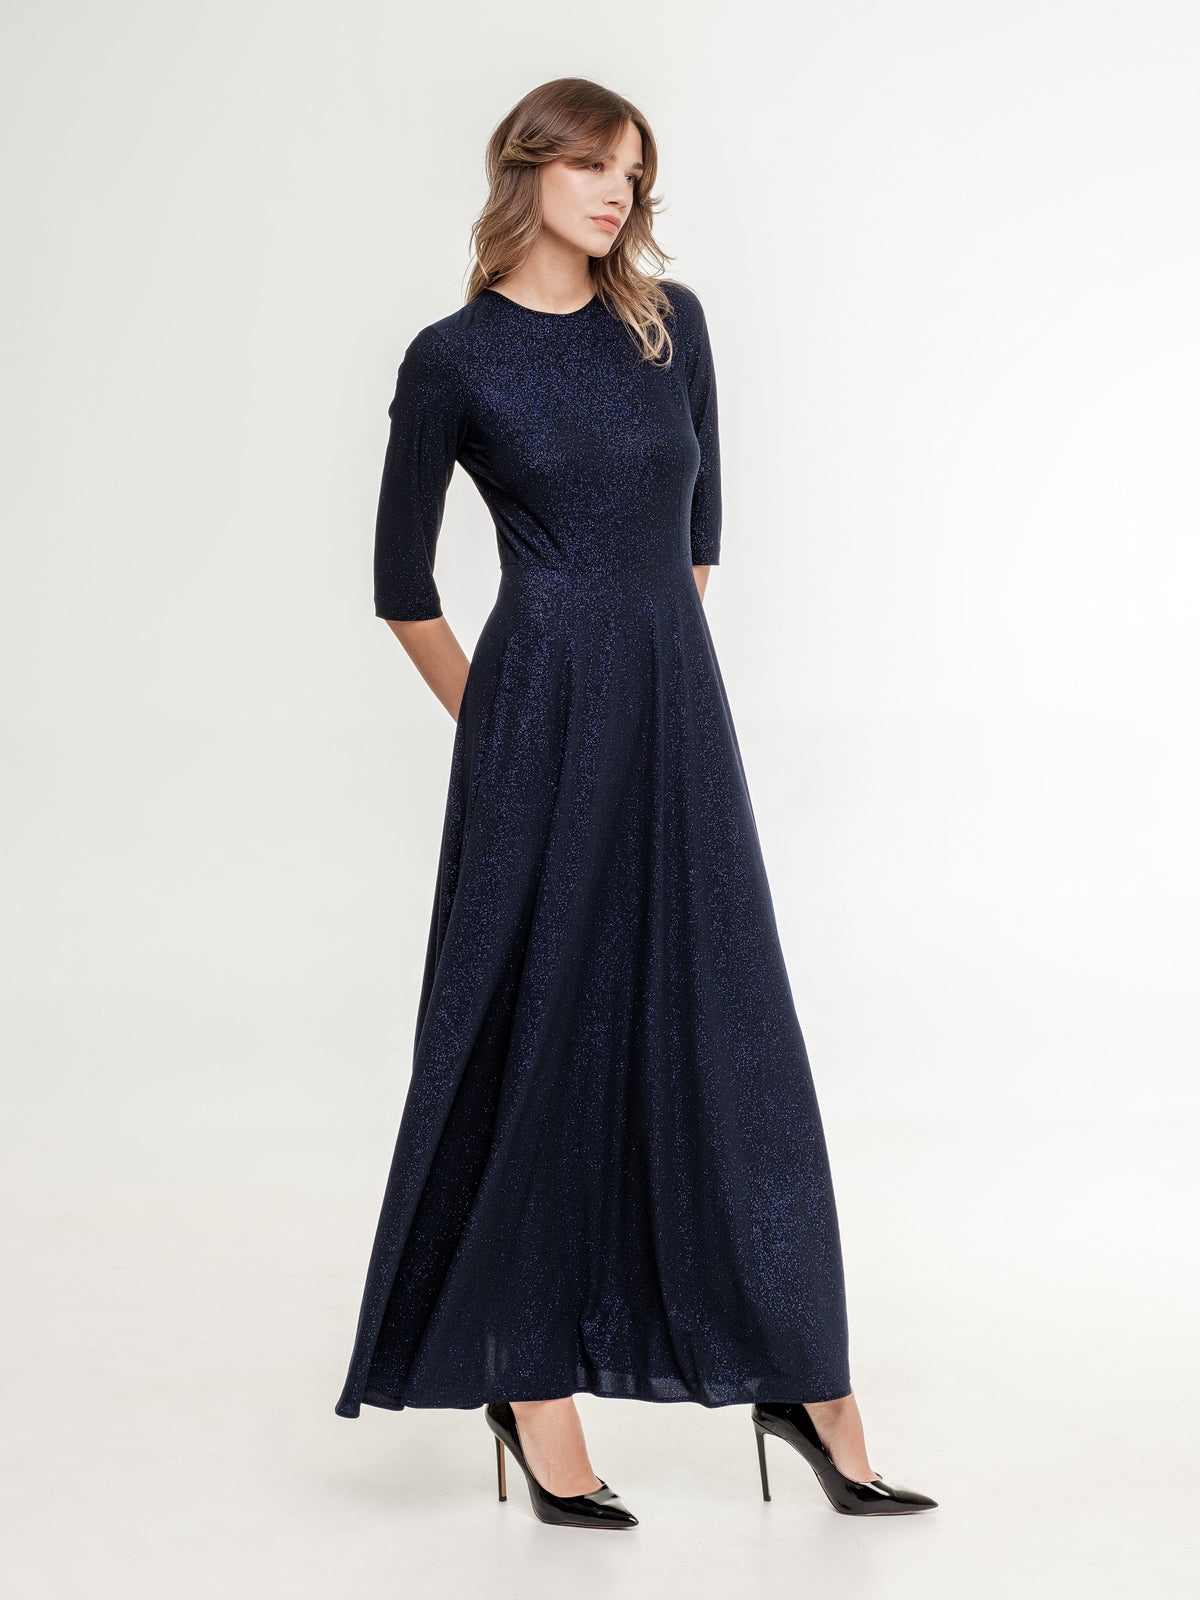 Shiny blue long classy dress